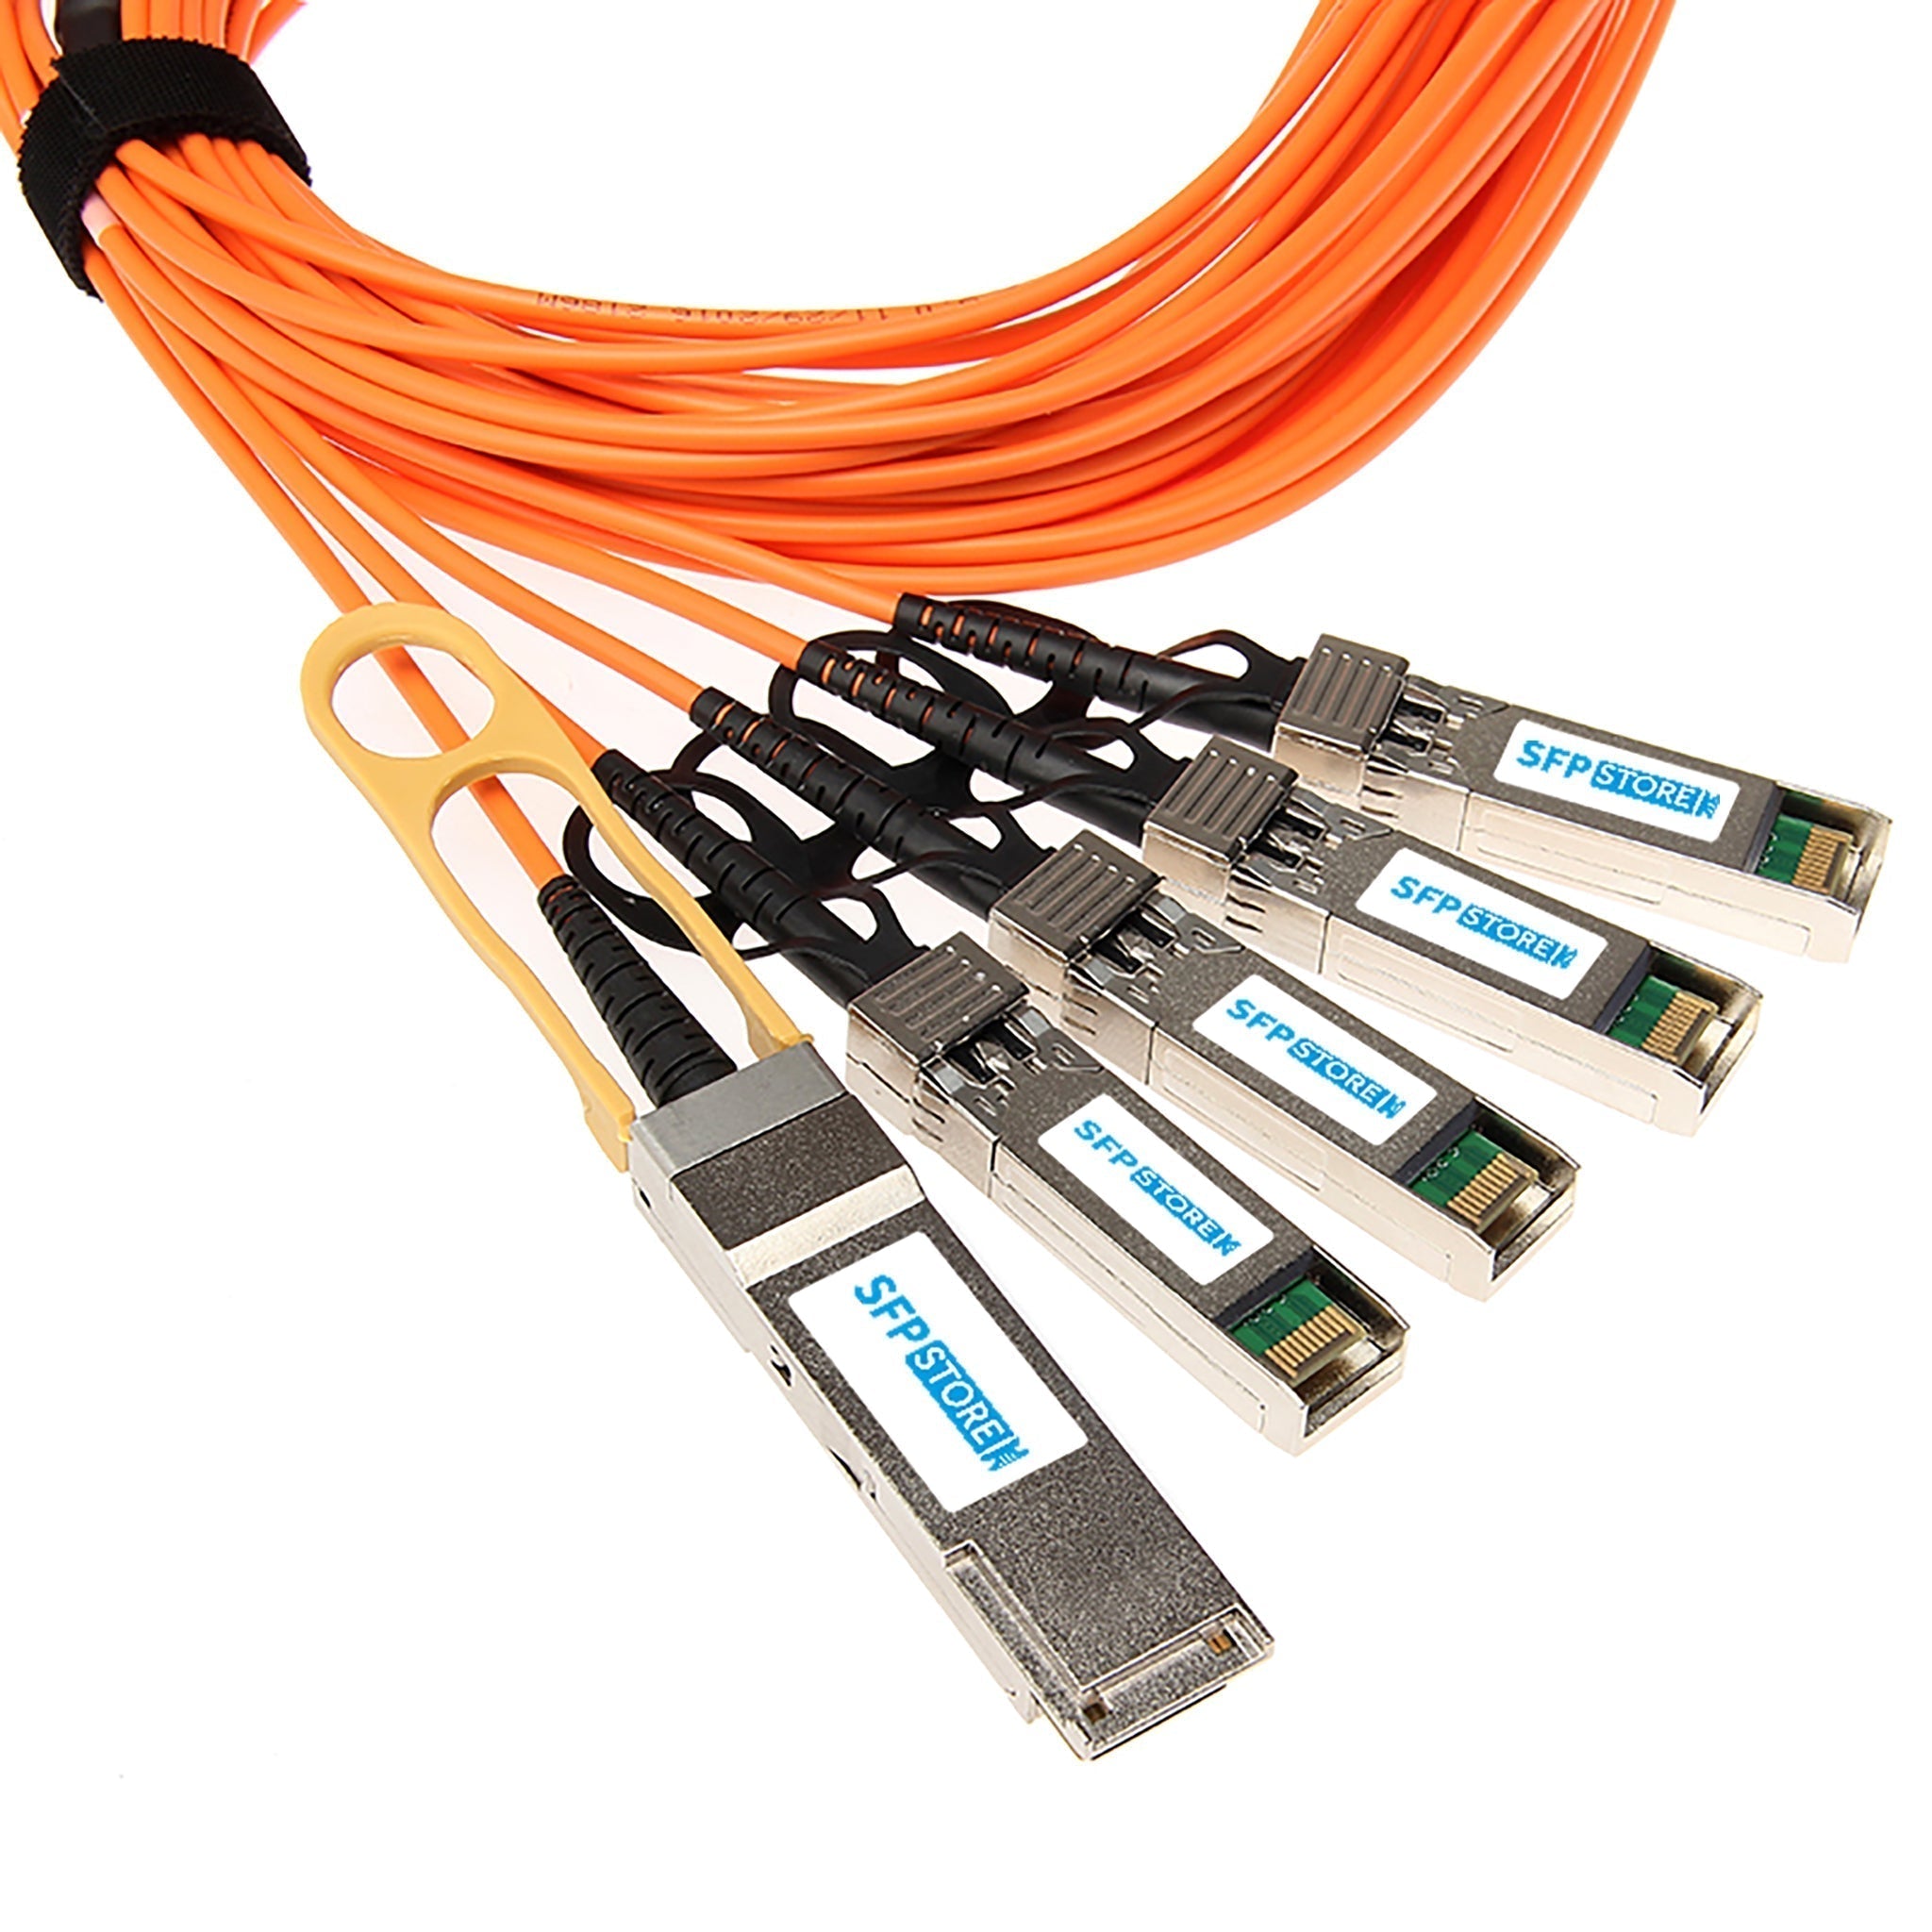 QSFP-4SFP25G-AOC1M-C - 1m Cisco Compatible 100G QSFP28 to 4 x 25G SFP28 Active Optical Cable